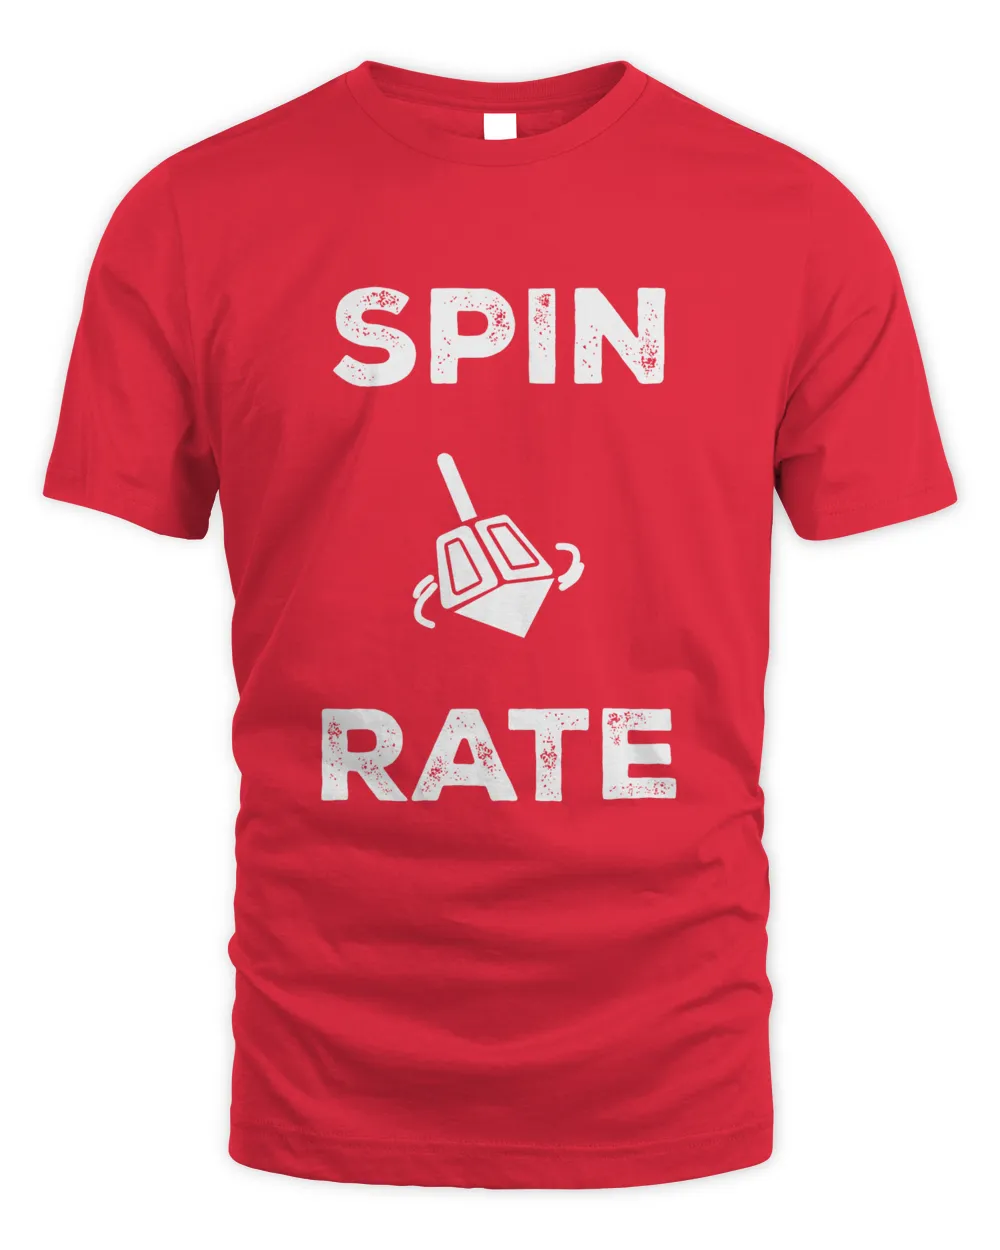 Spin Rate Israel Baseball Shirt Unisex Standard T-Shirt red 